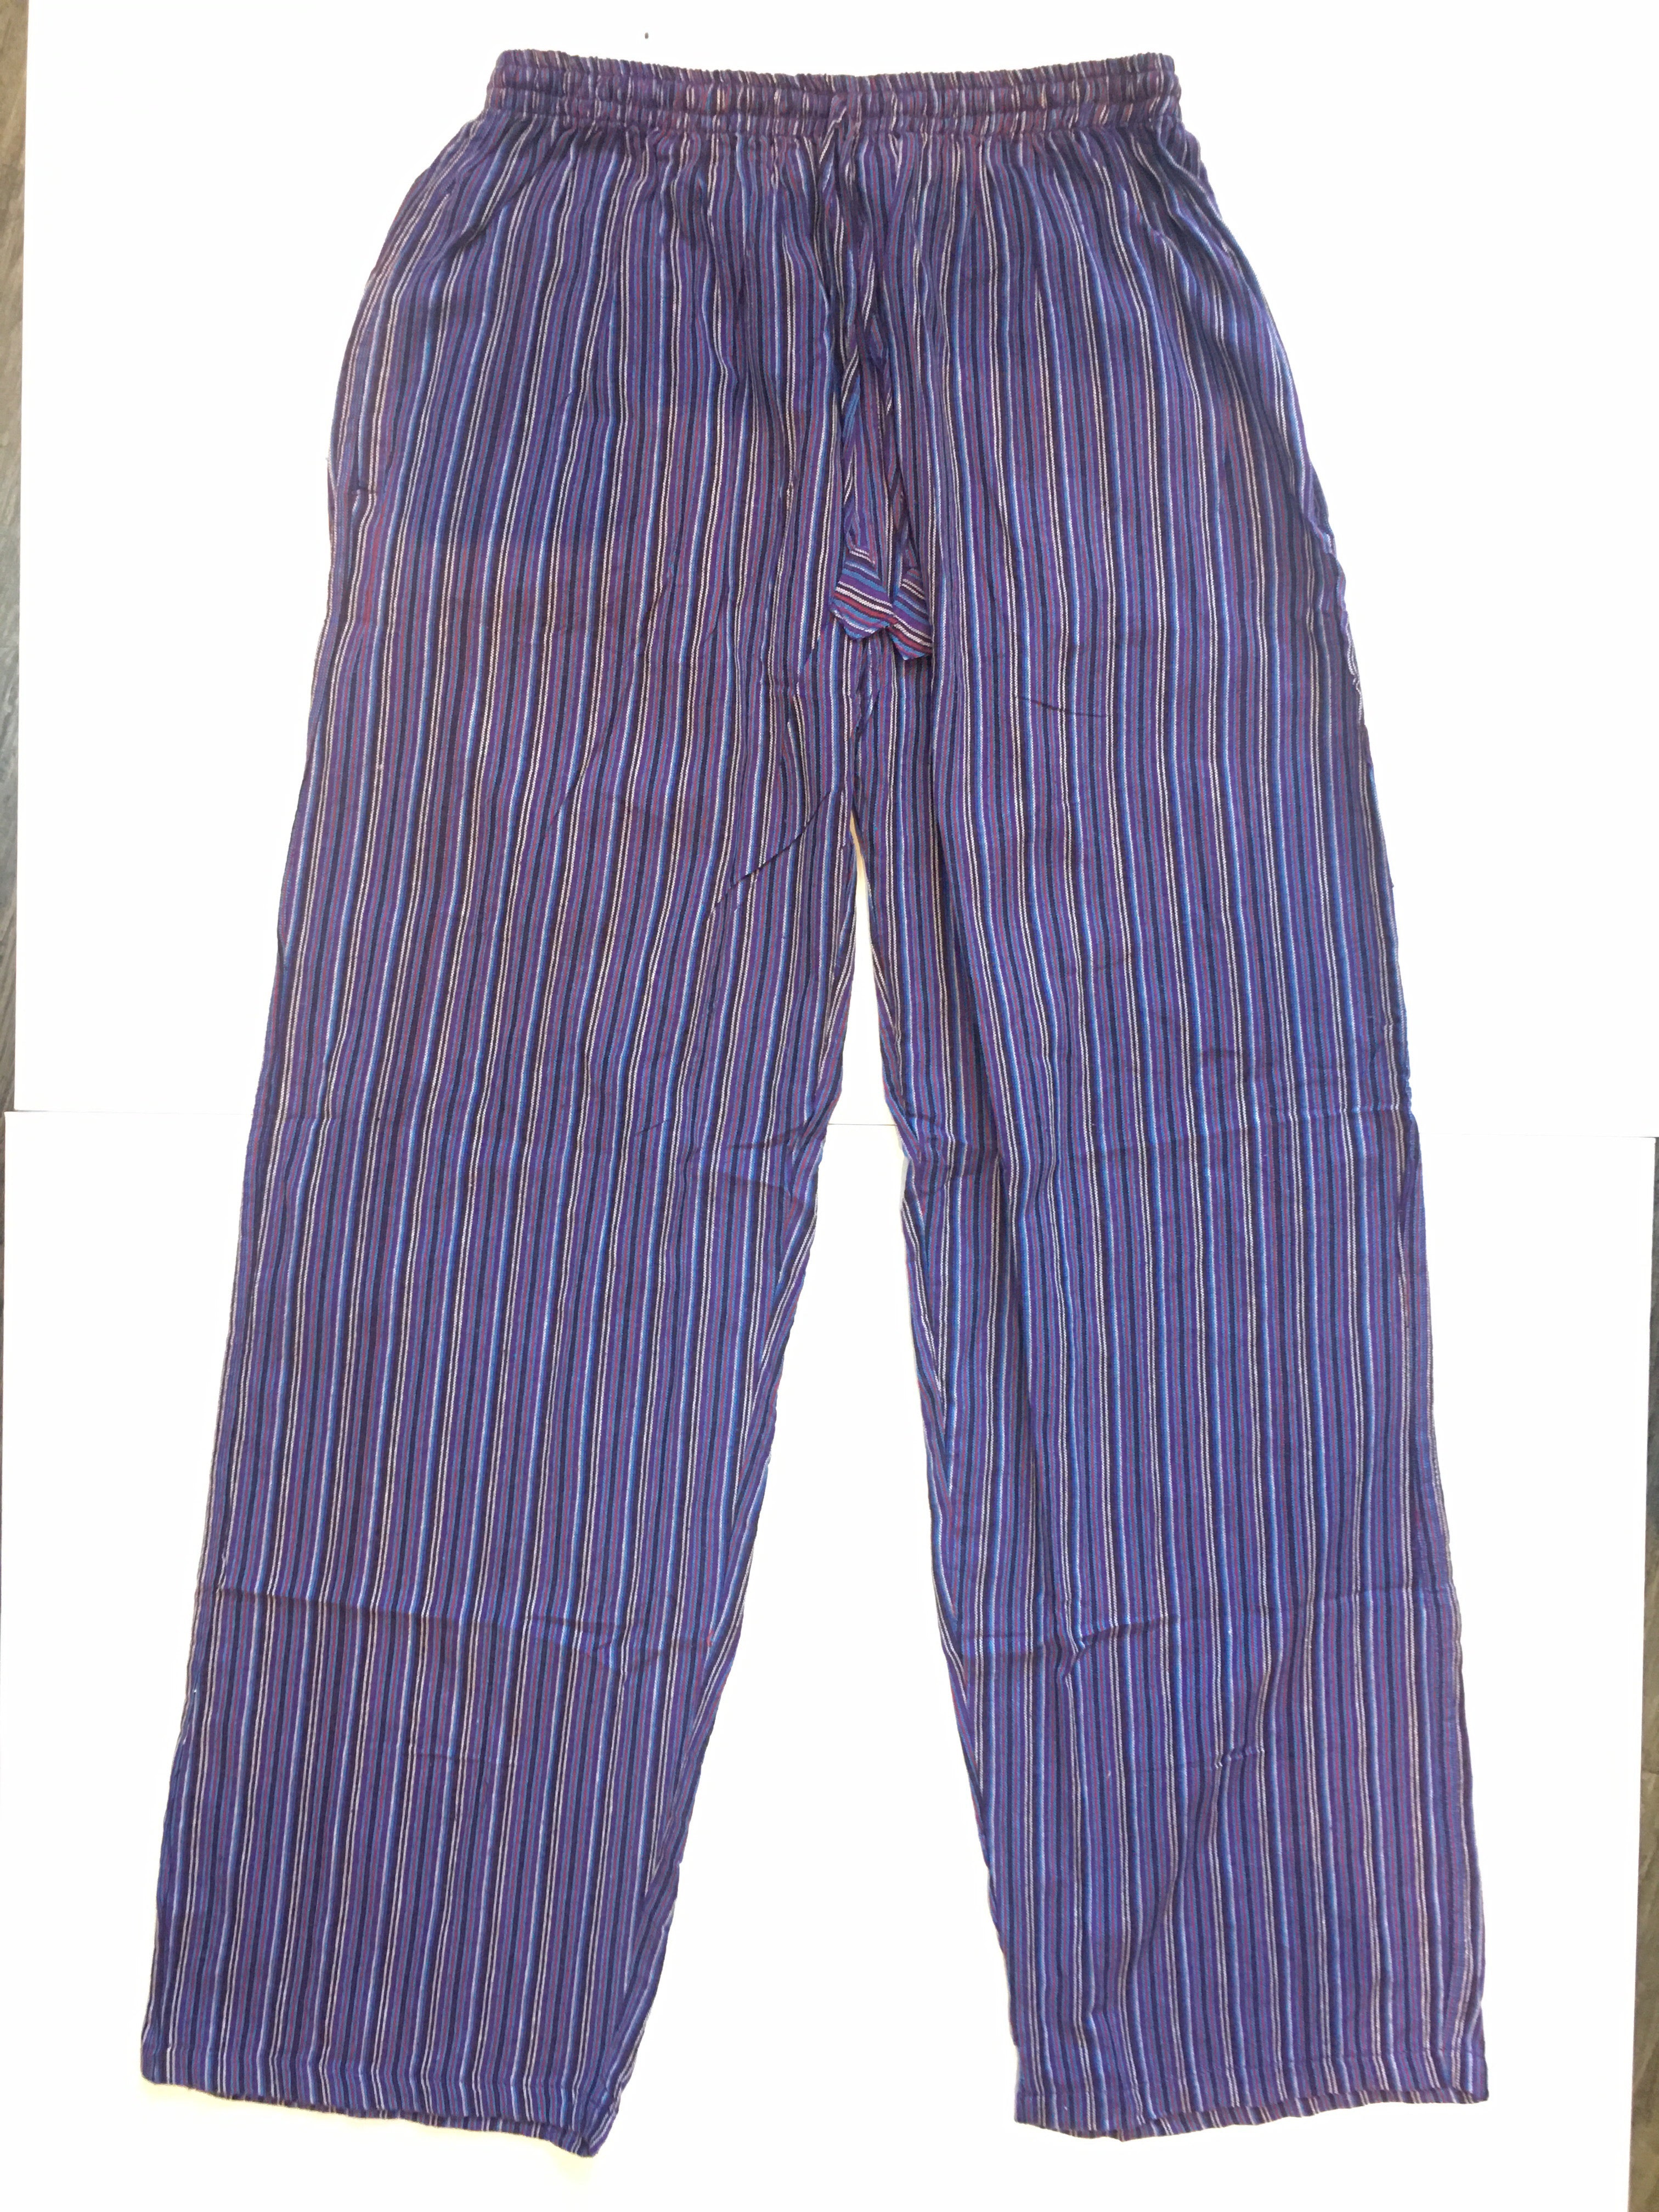 BLUE HAREM PANTS Men Striped Printed Rayon Hippie Pants  Etsy